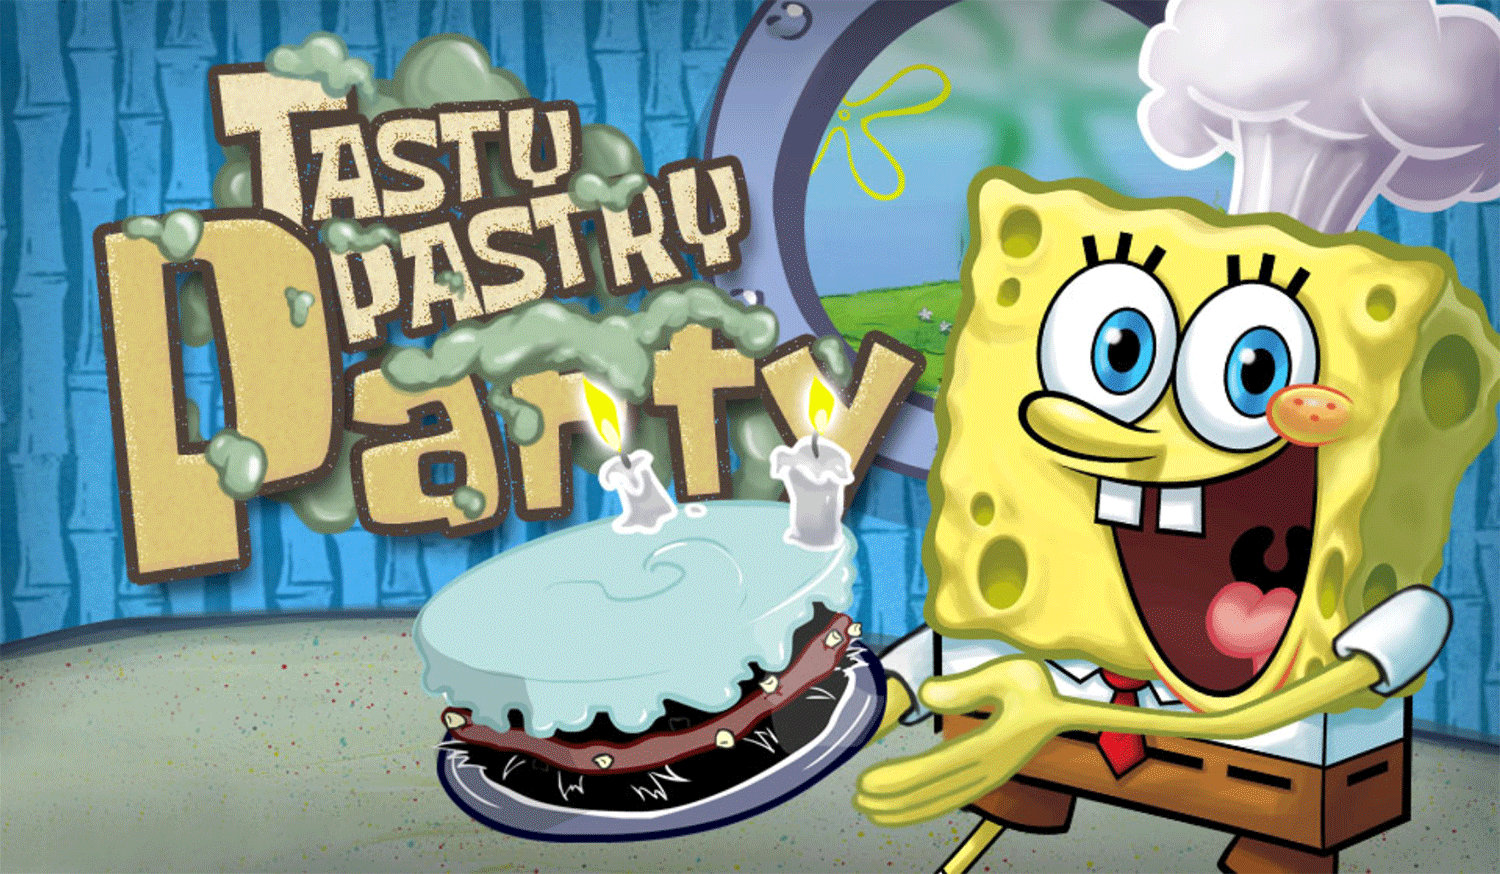 Spongebob Squarepants Tasty Pastry Party Welcome Screen Screenshot.